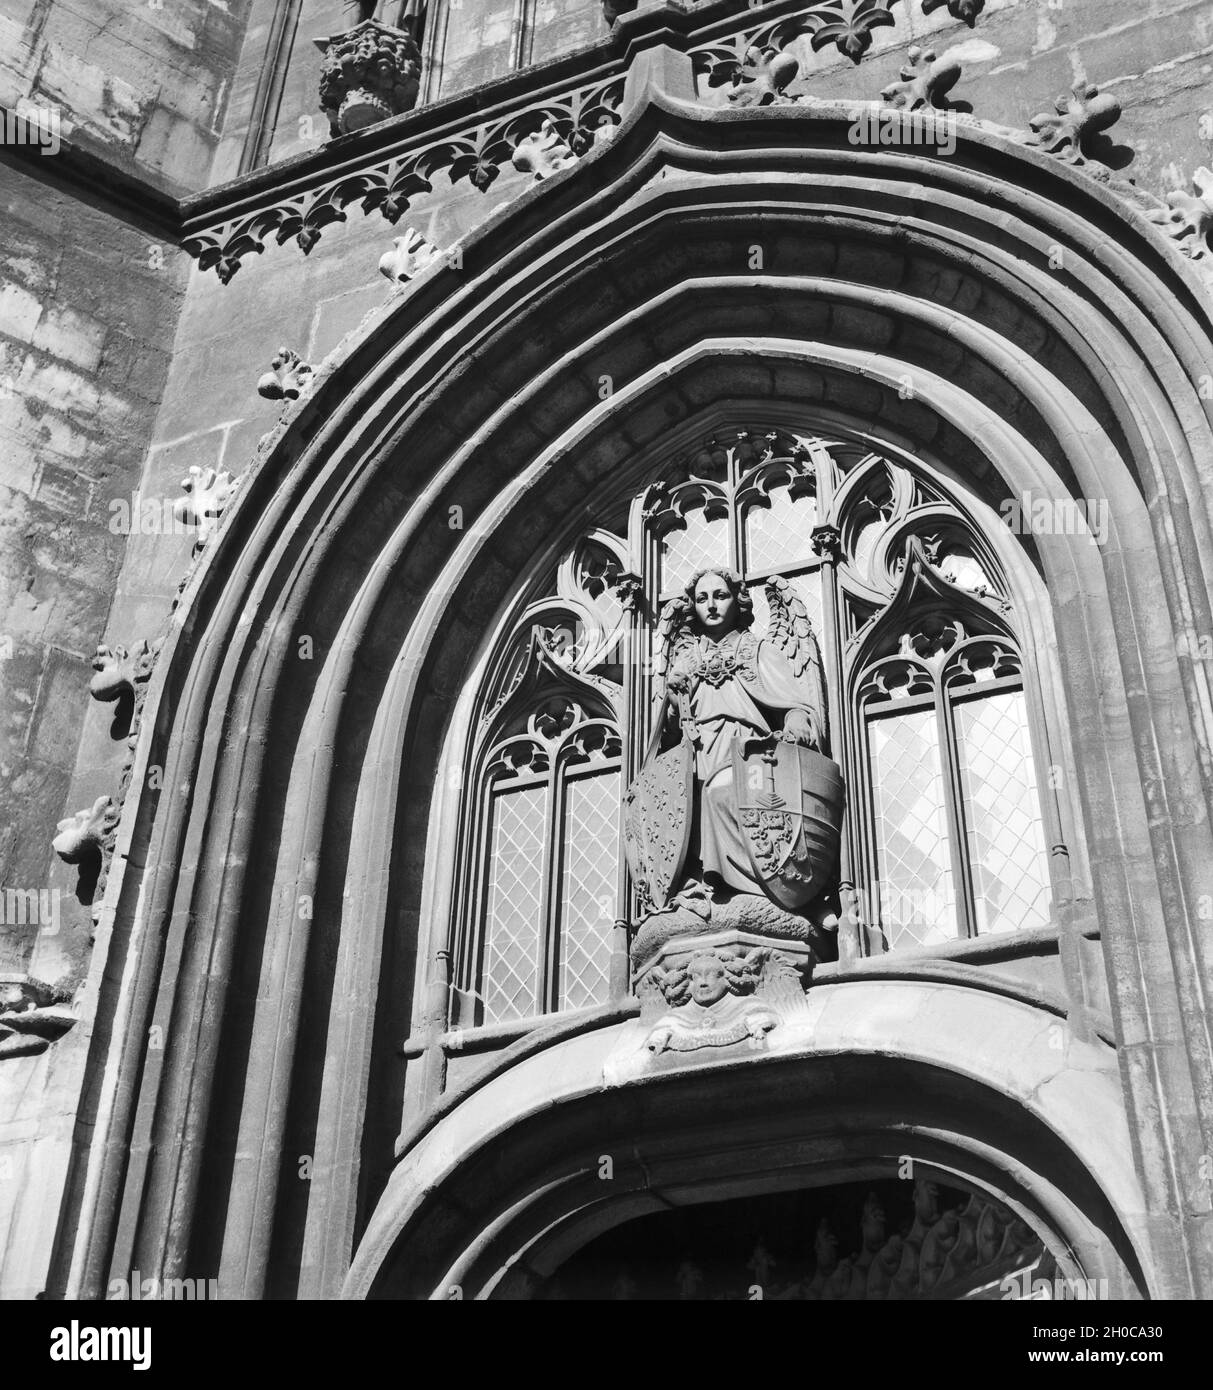 Detail am Portal des Kaiserdomes zu Aachen, Deutschland 1930er Jahre. Detail at the church gate of the Kaiserdom cathedral at Aachen, Germany 1930s. Stock Photo